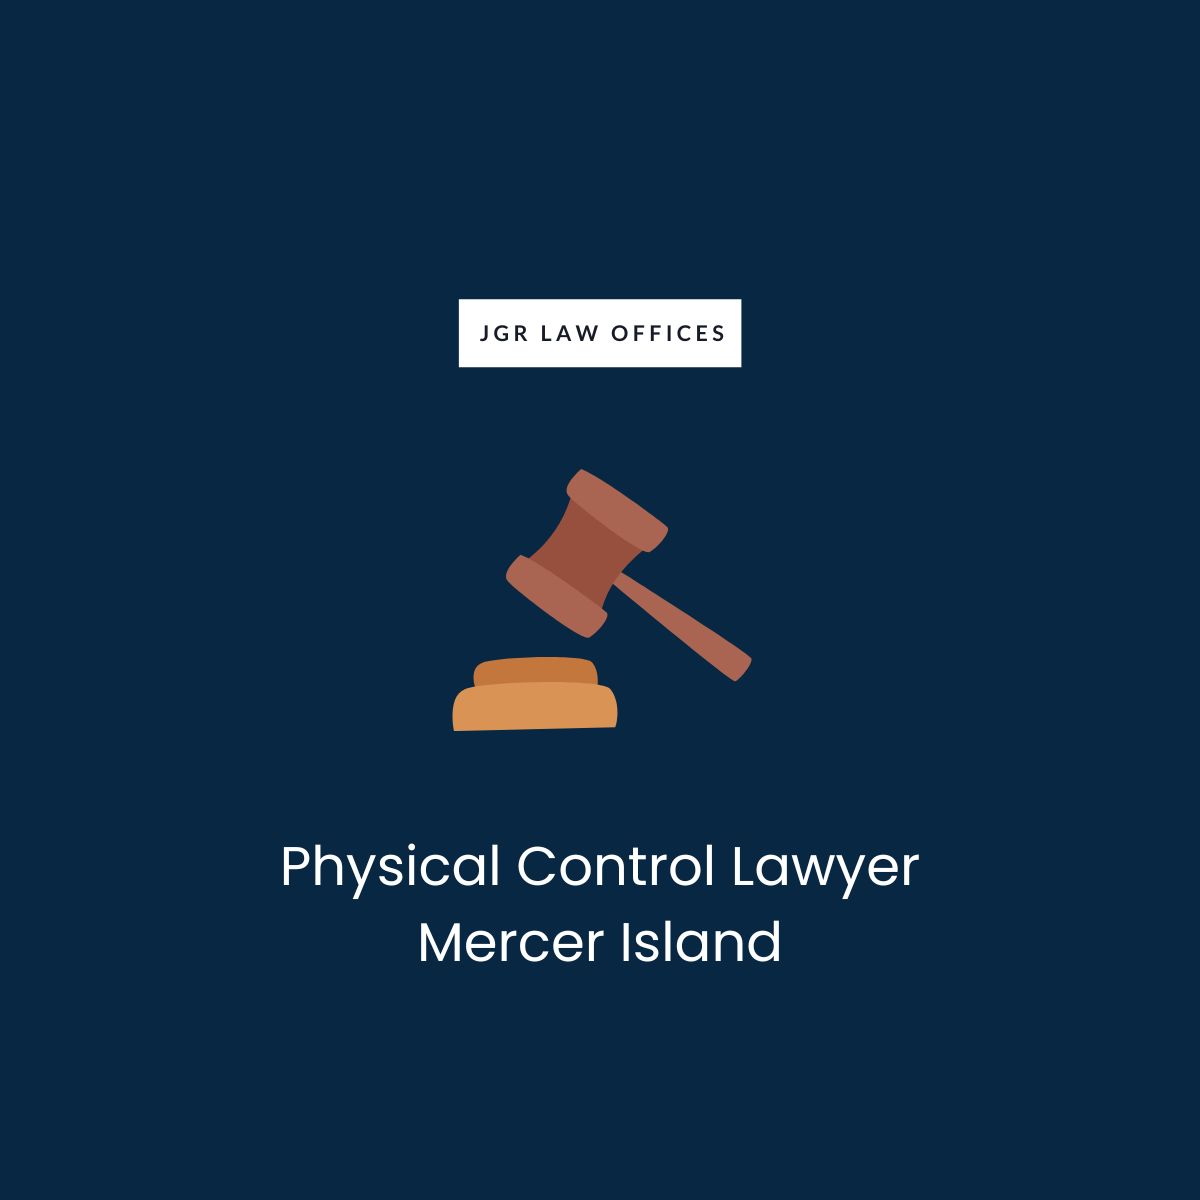 Physical Control Attorney Mercer Island Physical Control